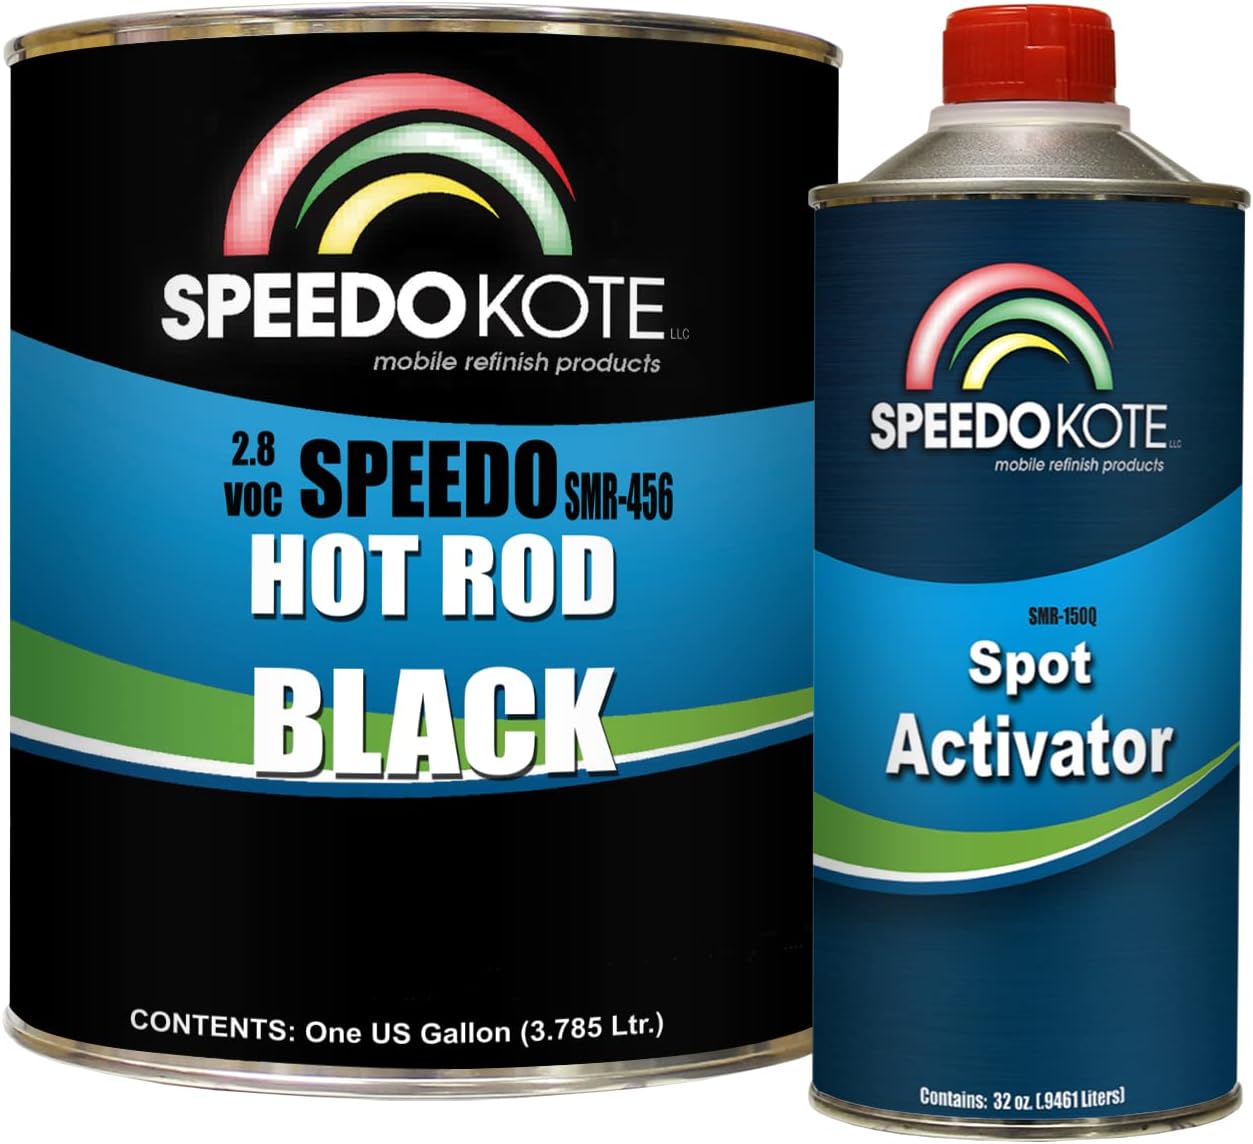 Speedokote SMR-456/150 - Hot Rod Black Paint 2.8 voc, [...]